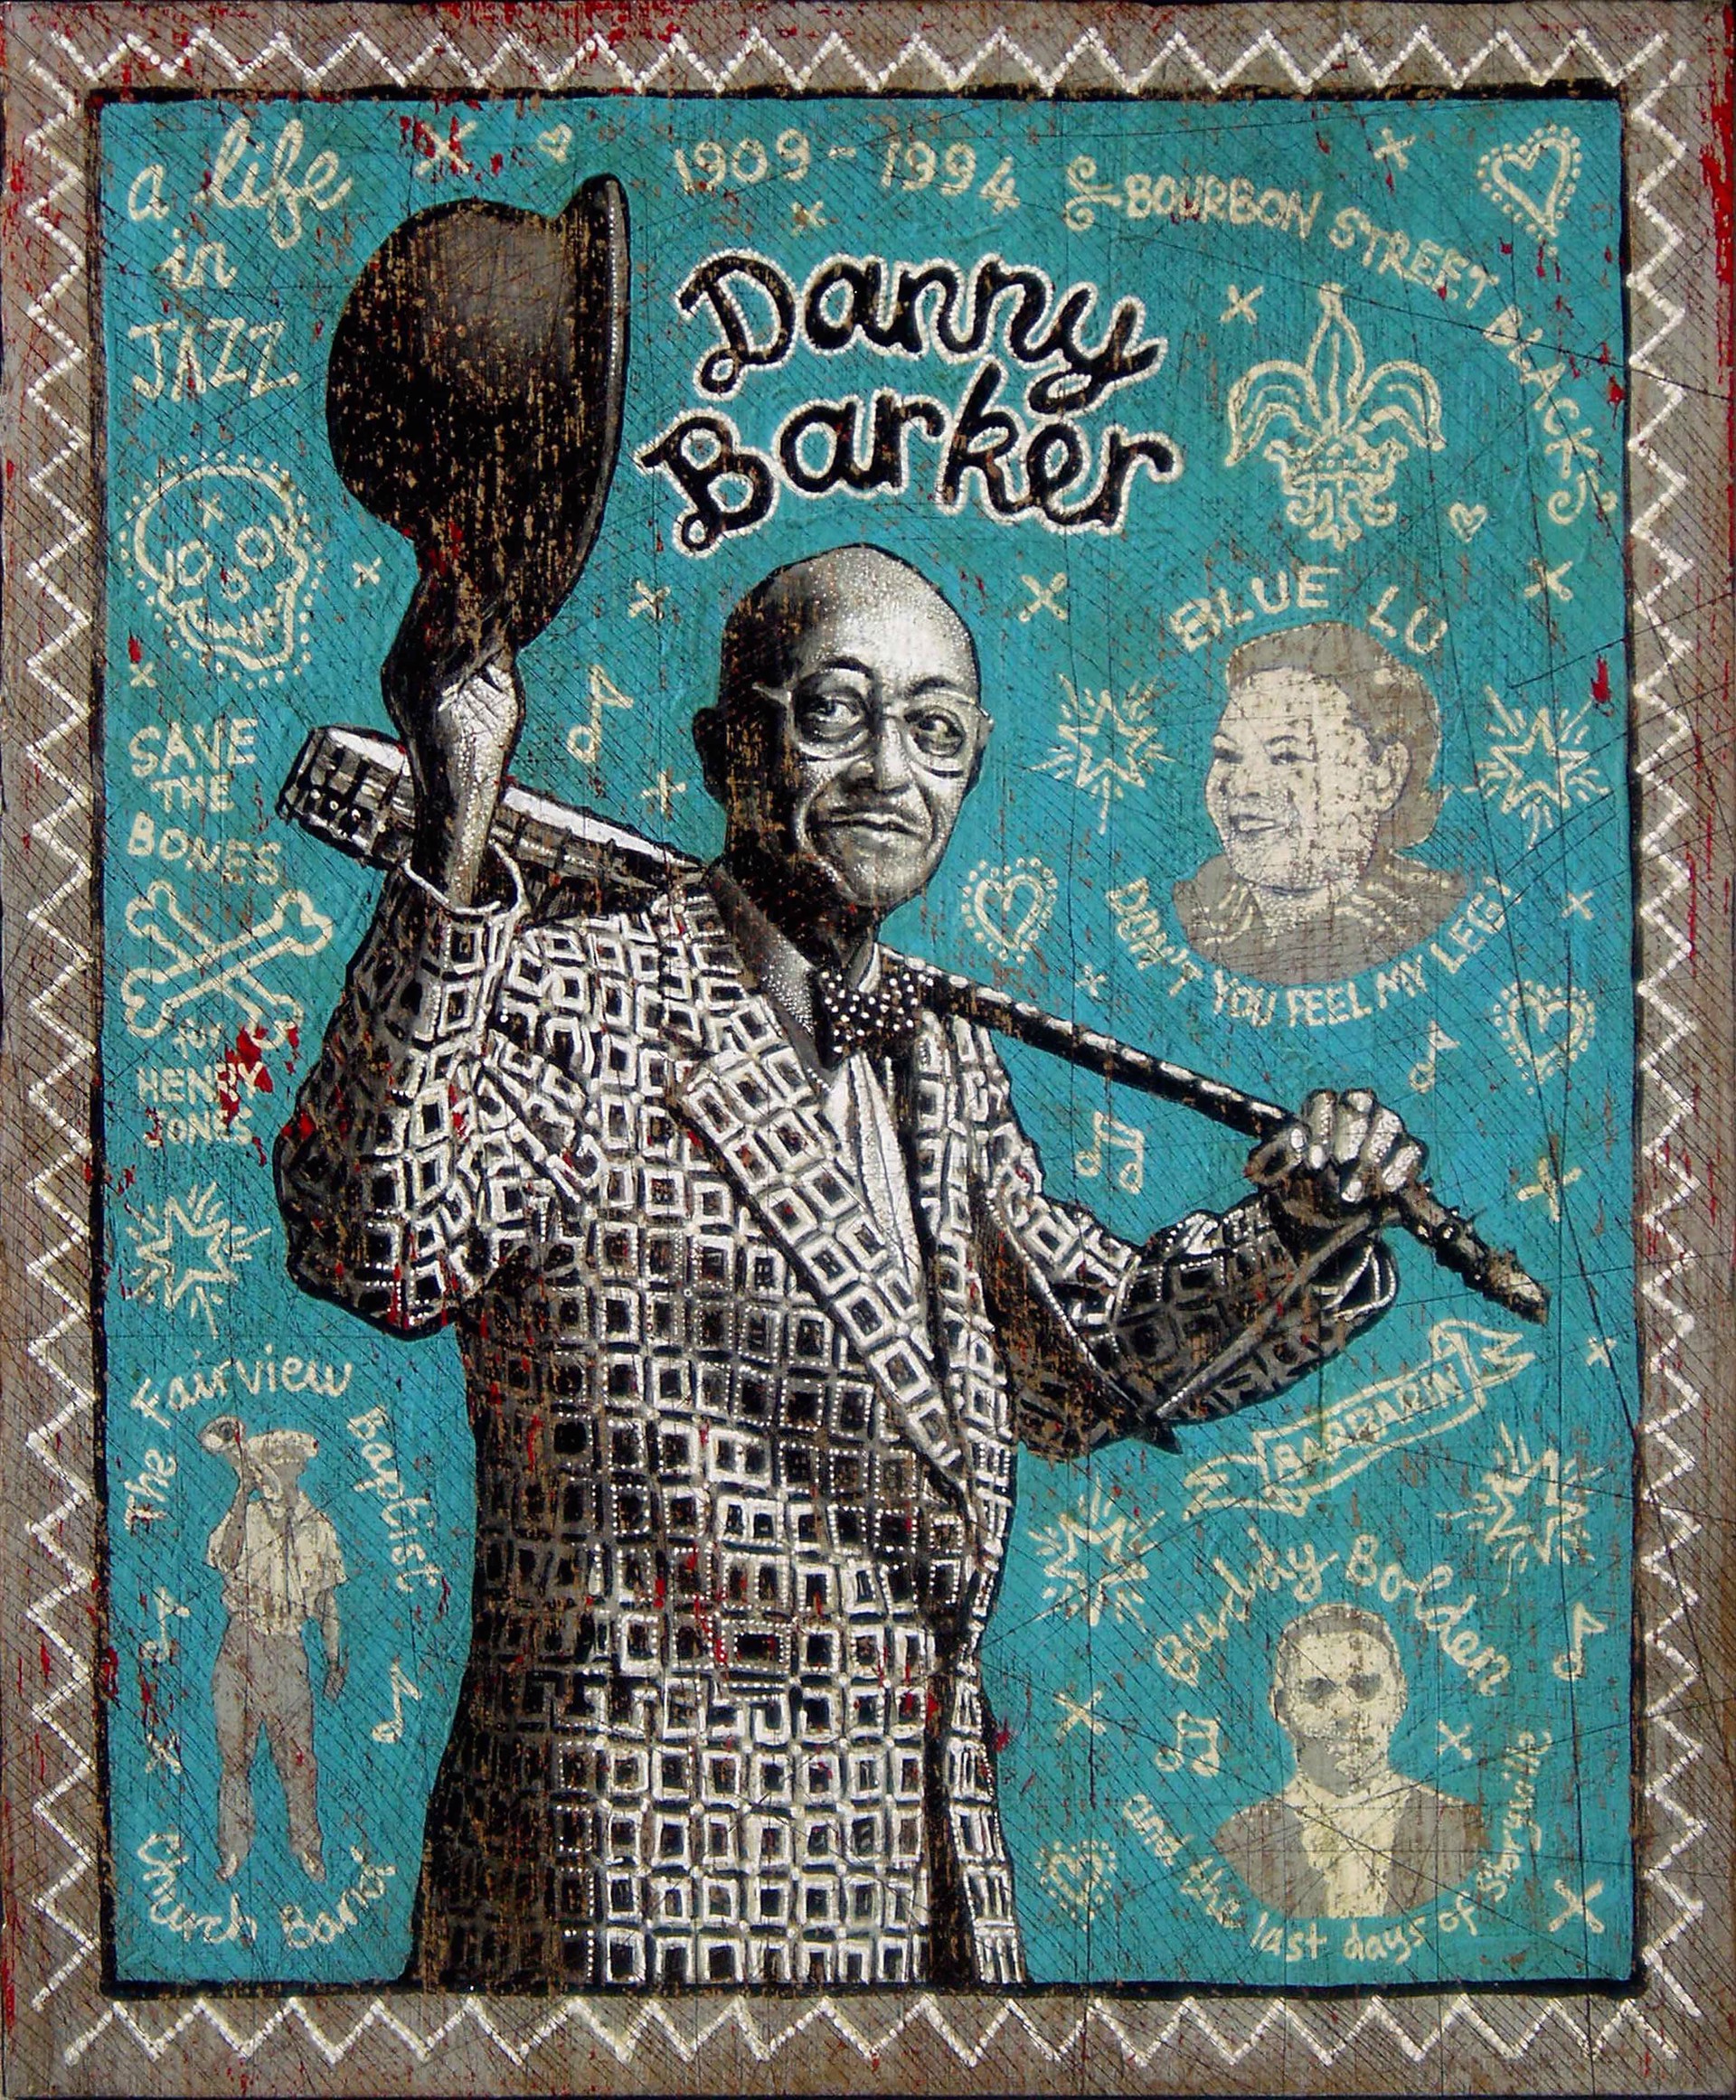 Danny Barker by Jon Langford